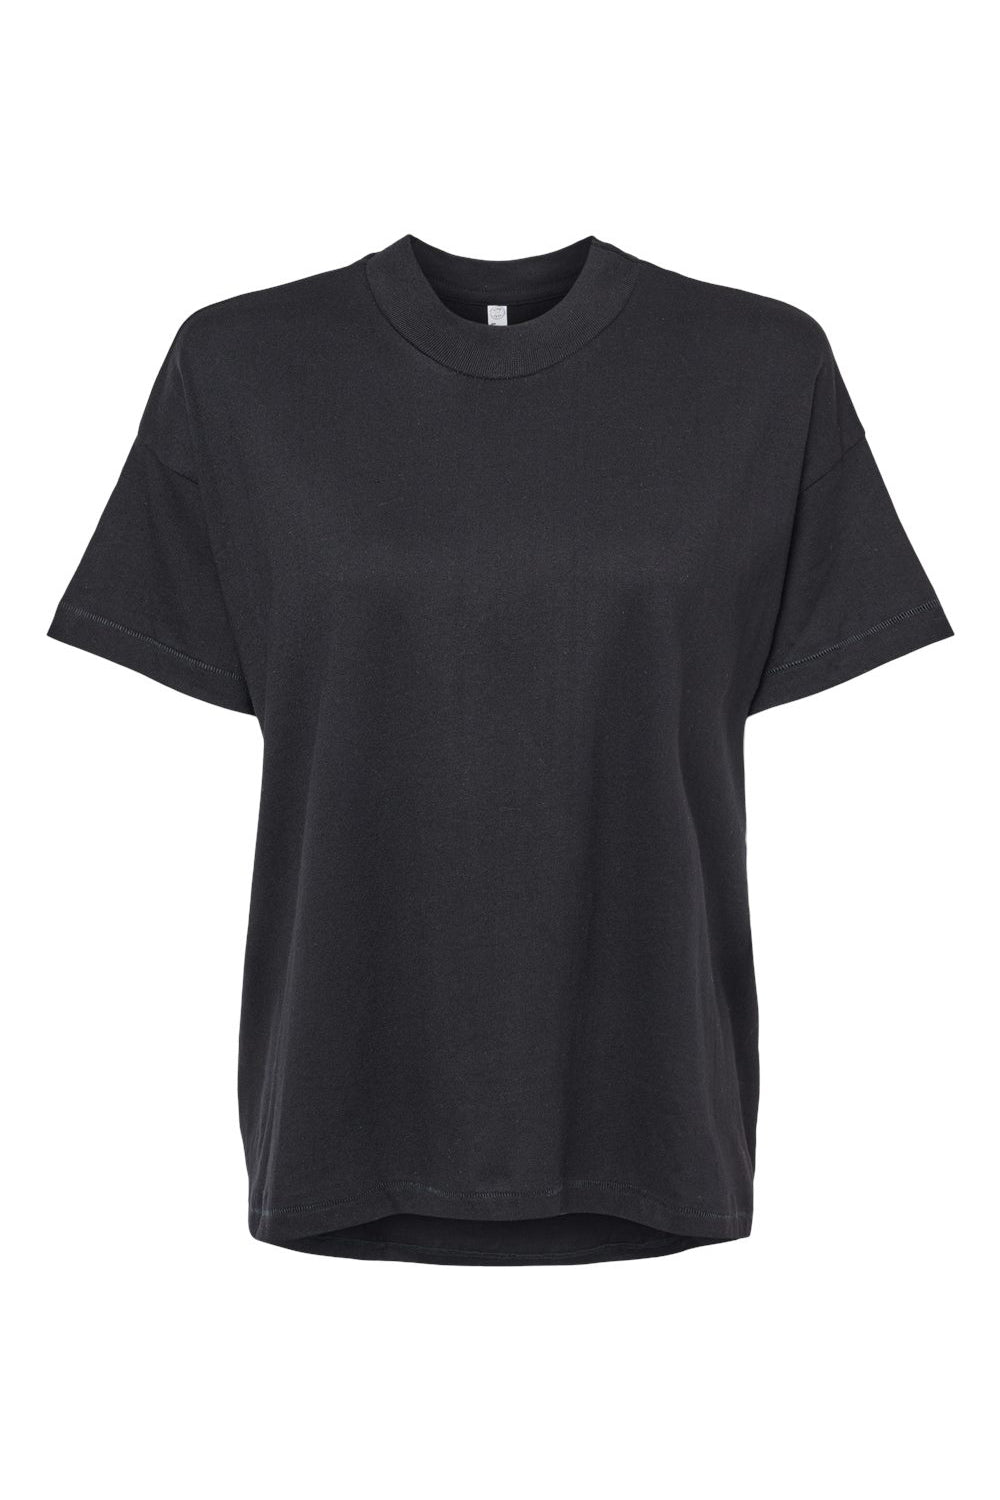 LAT 3519 Womens Hi-Lo Short Sleeve Crewneck T-Shirt Black Flat Front